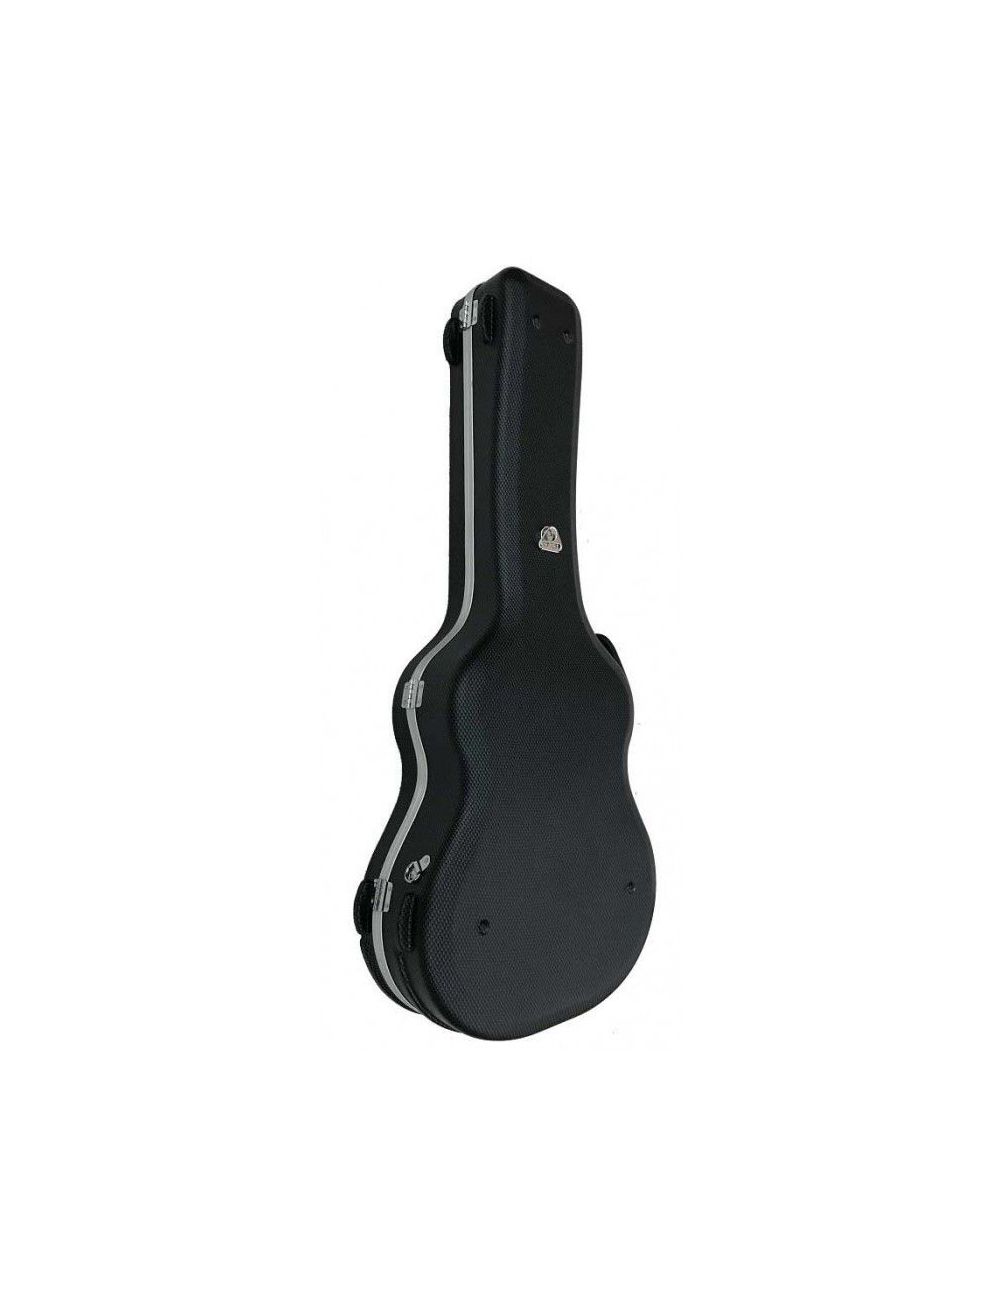 Cibeles C210.003C-N Standard Classical Guitar Case C210003C-N Classical and flamenco